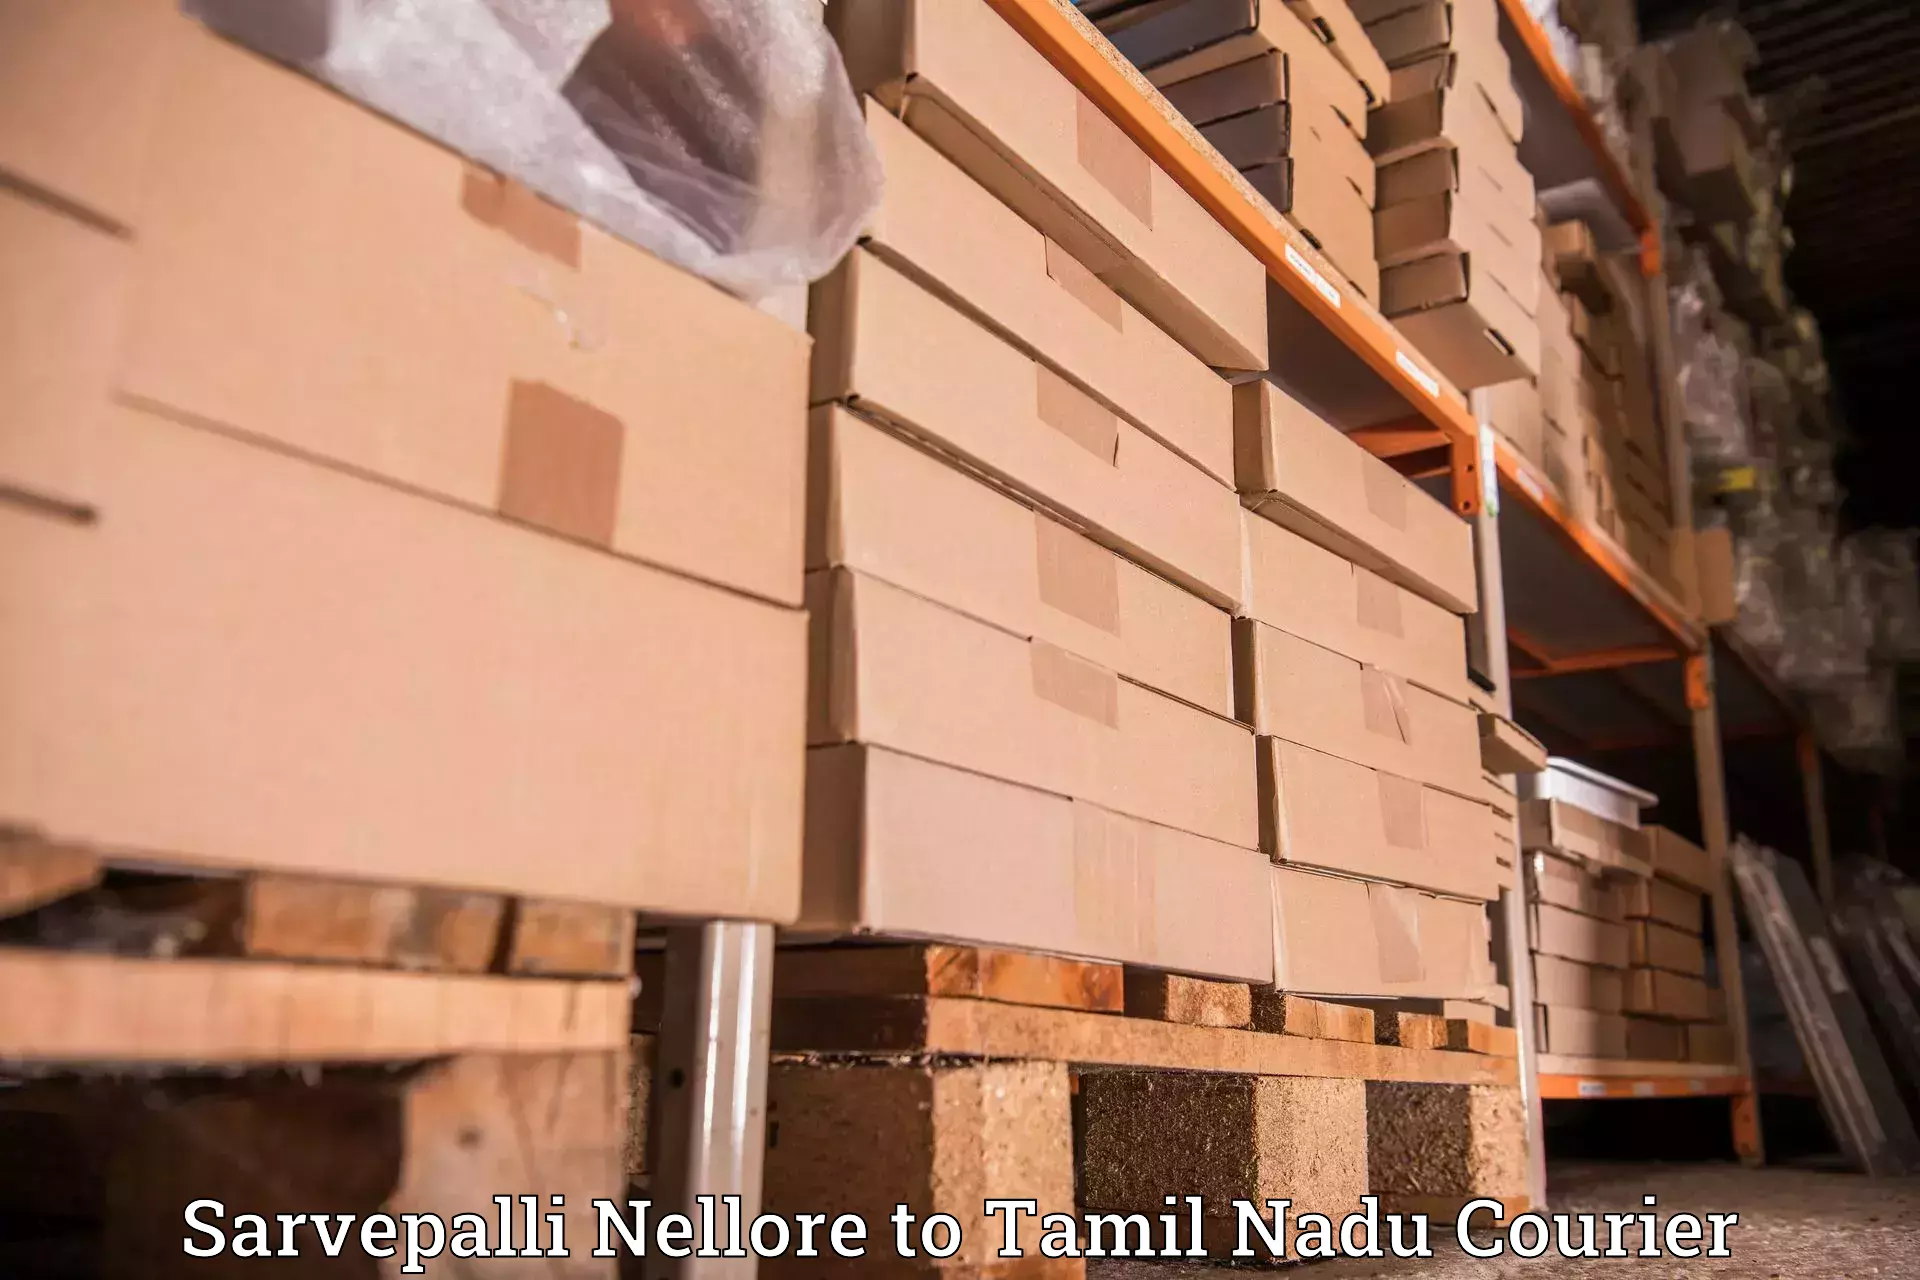 Courier app Sarvepalli Nellore to Chennai Port